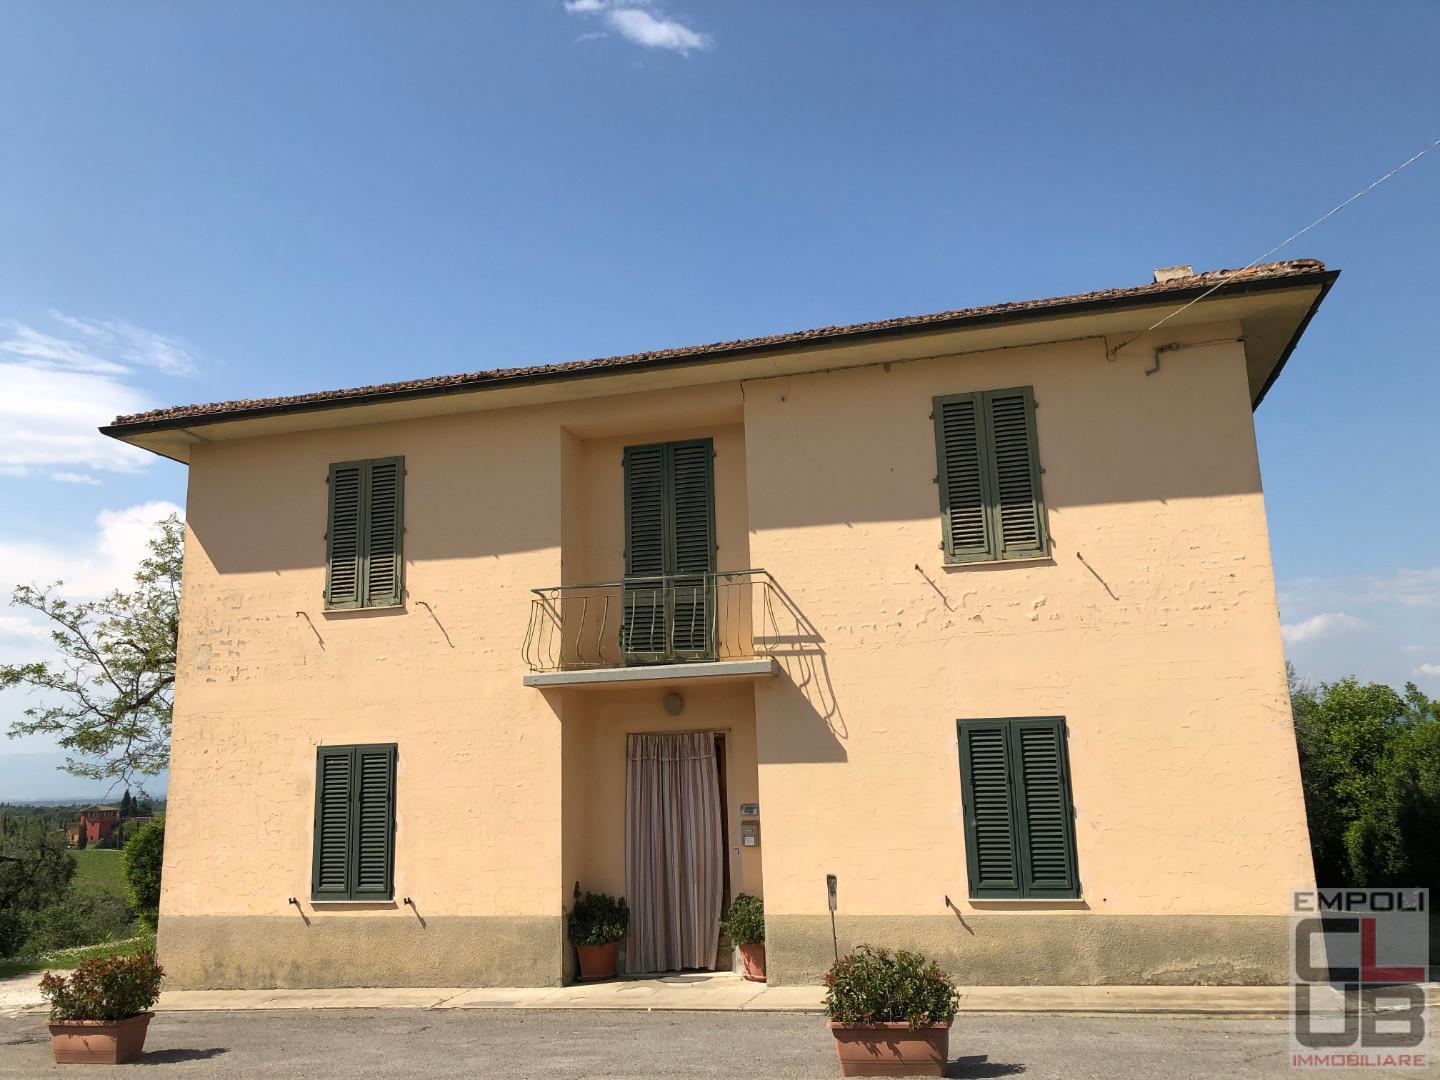 Casa singola in vendita a Cerreto Guidi (FI)